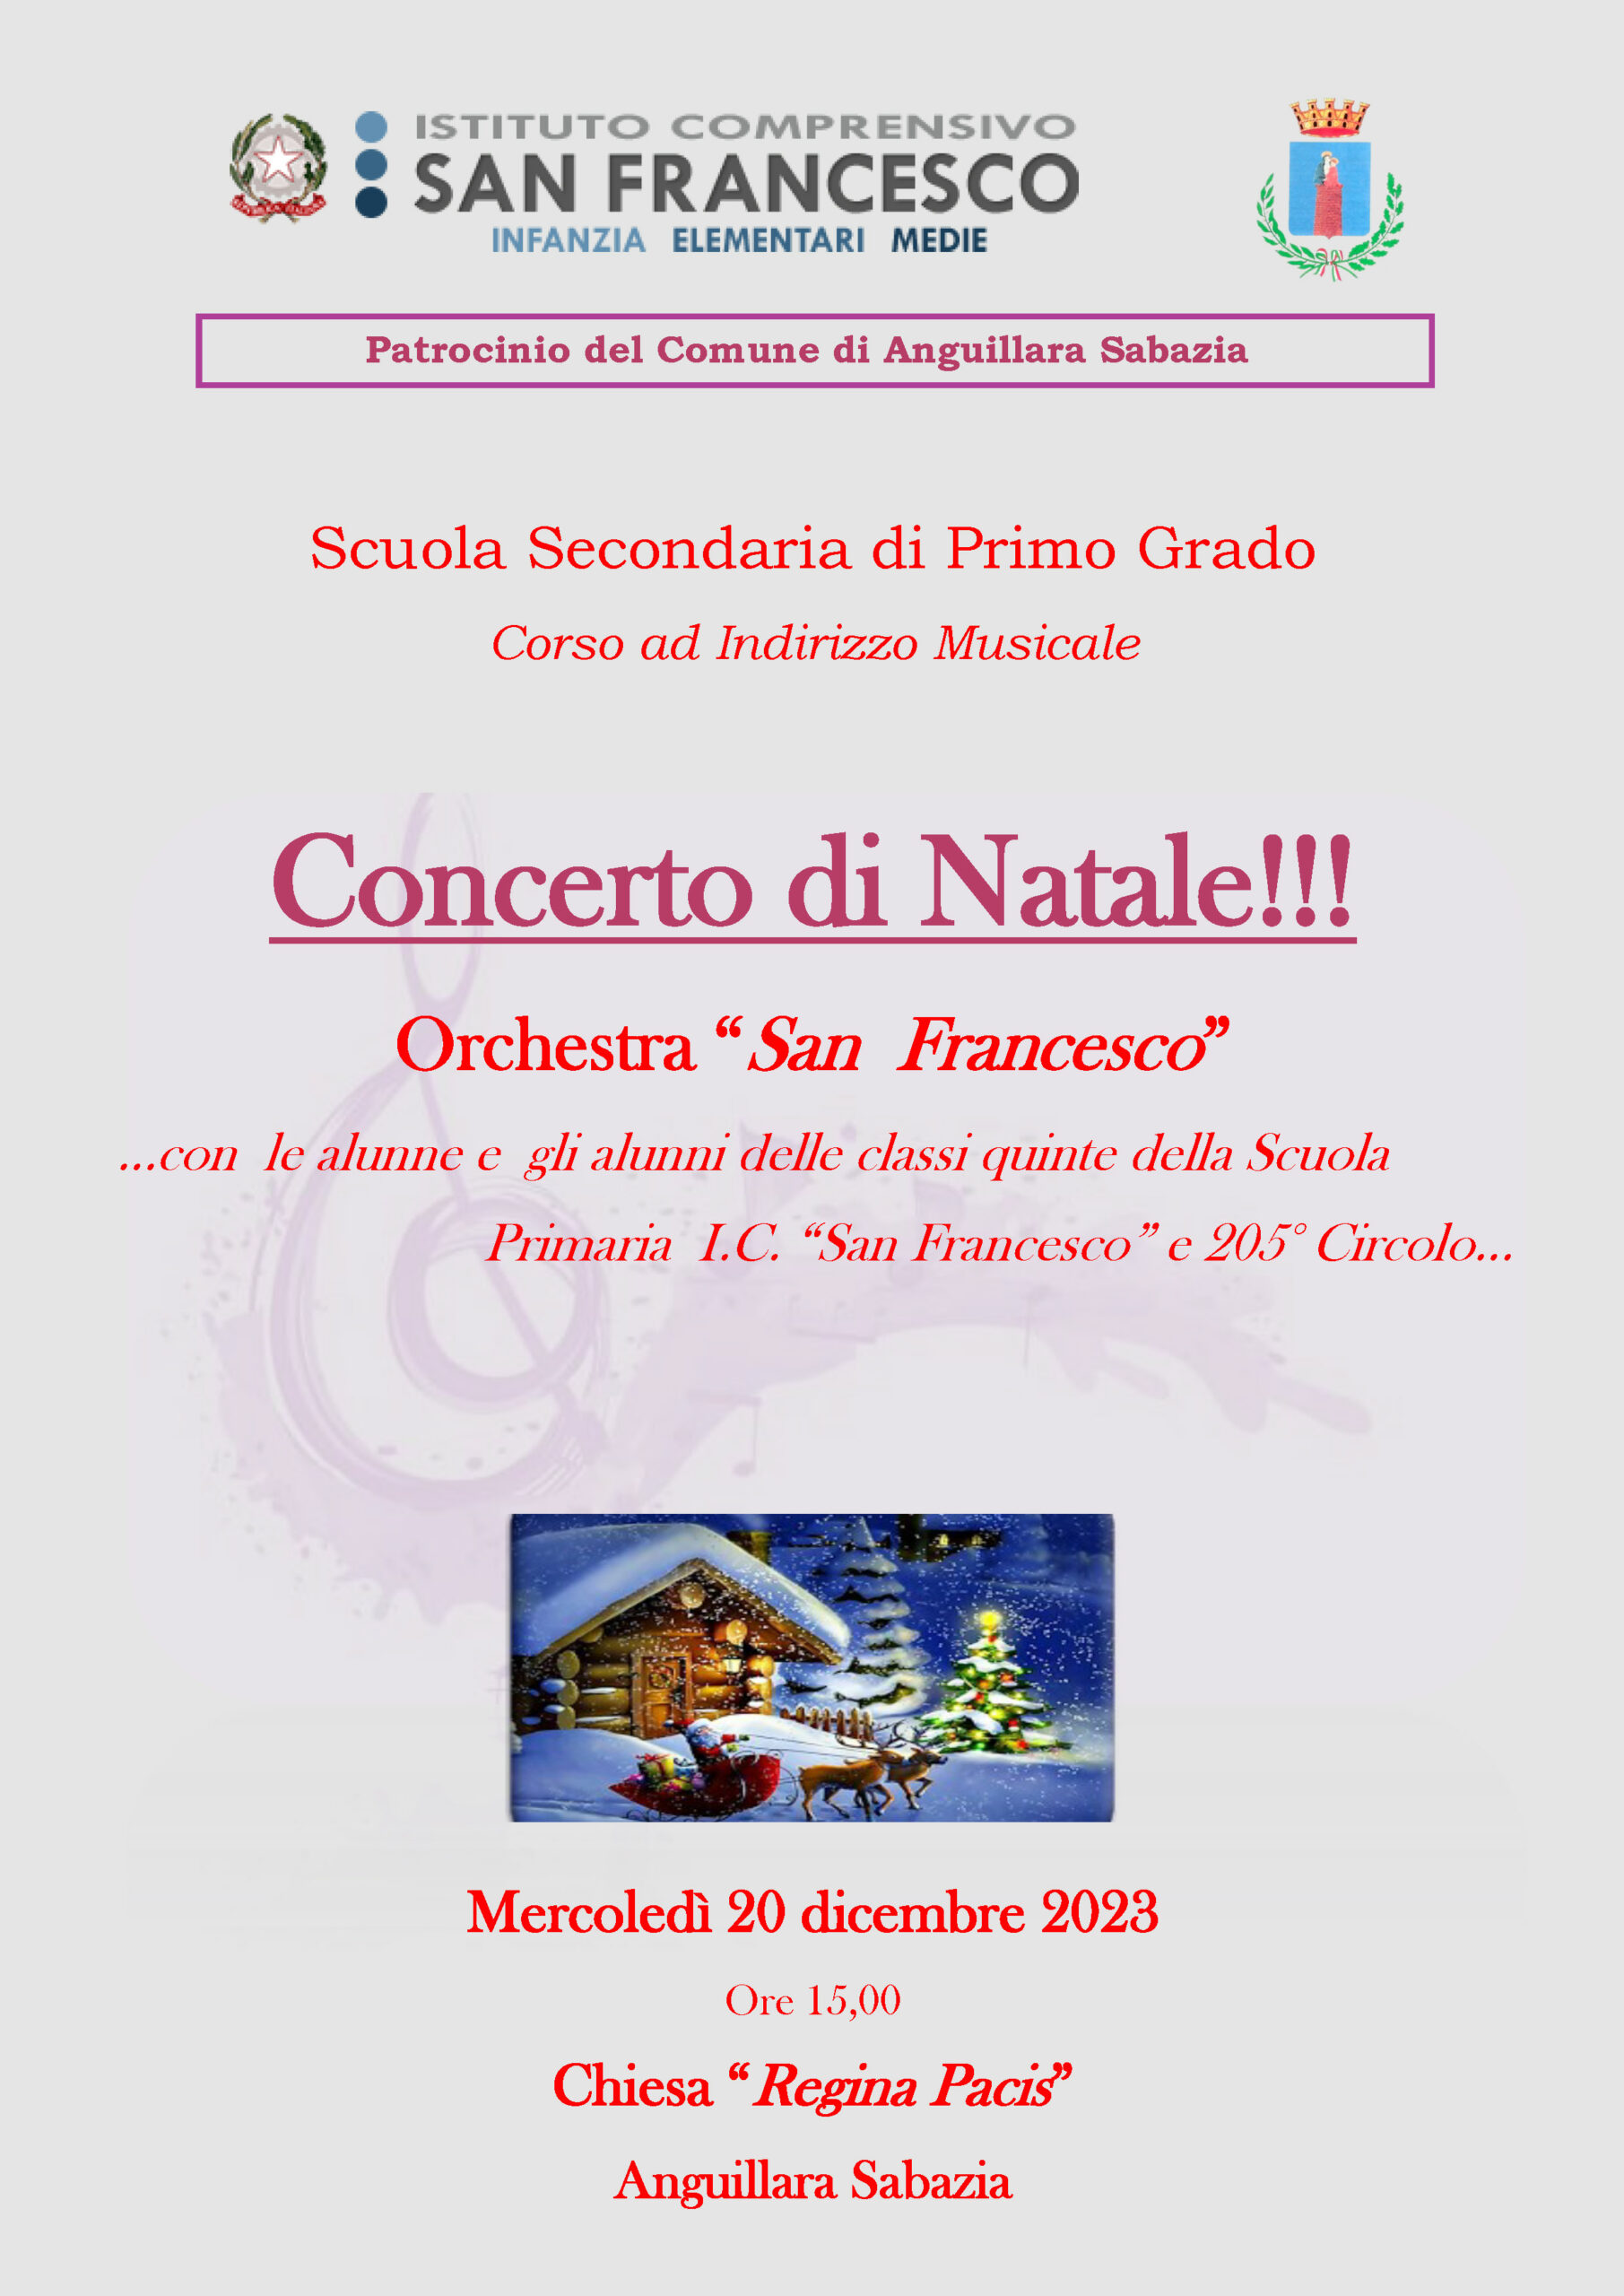 Orchestra “San Francesco